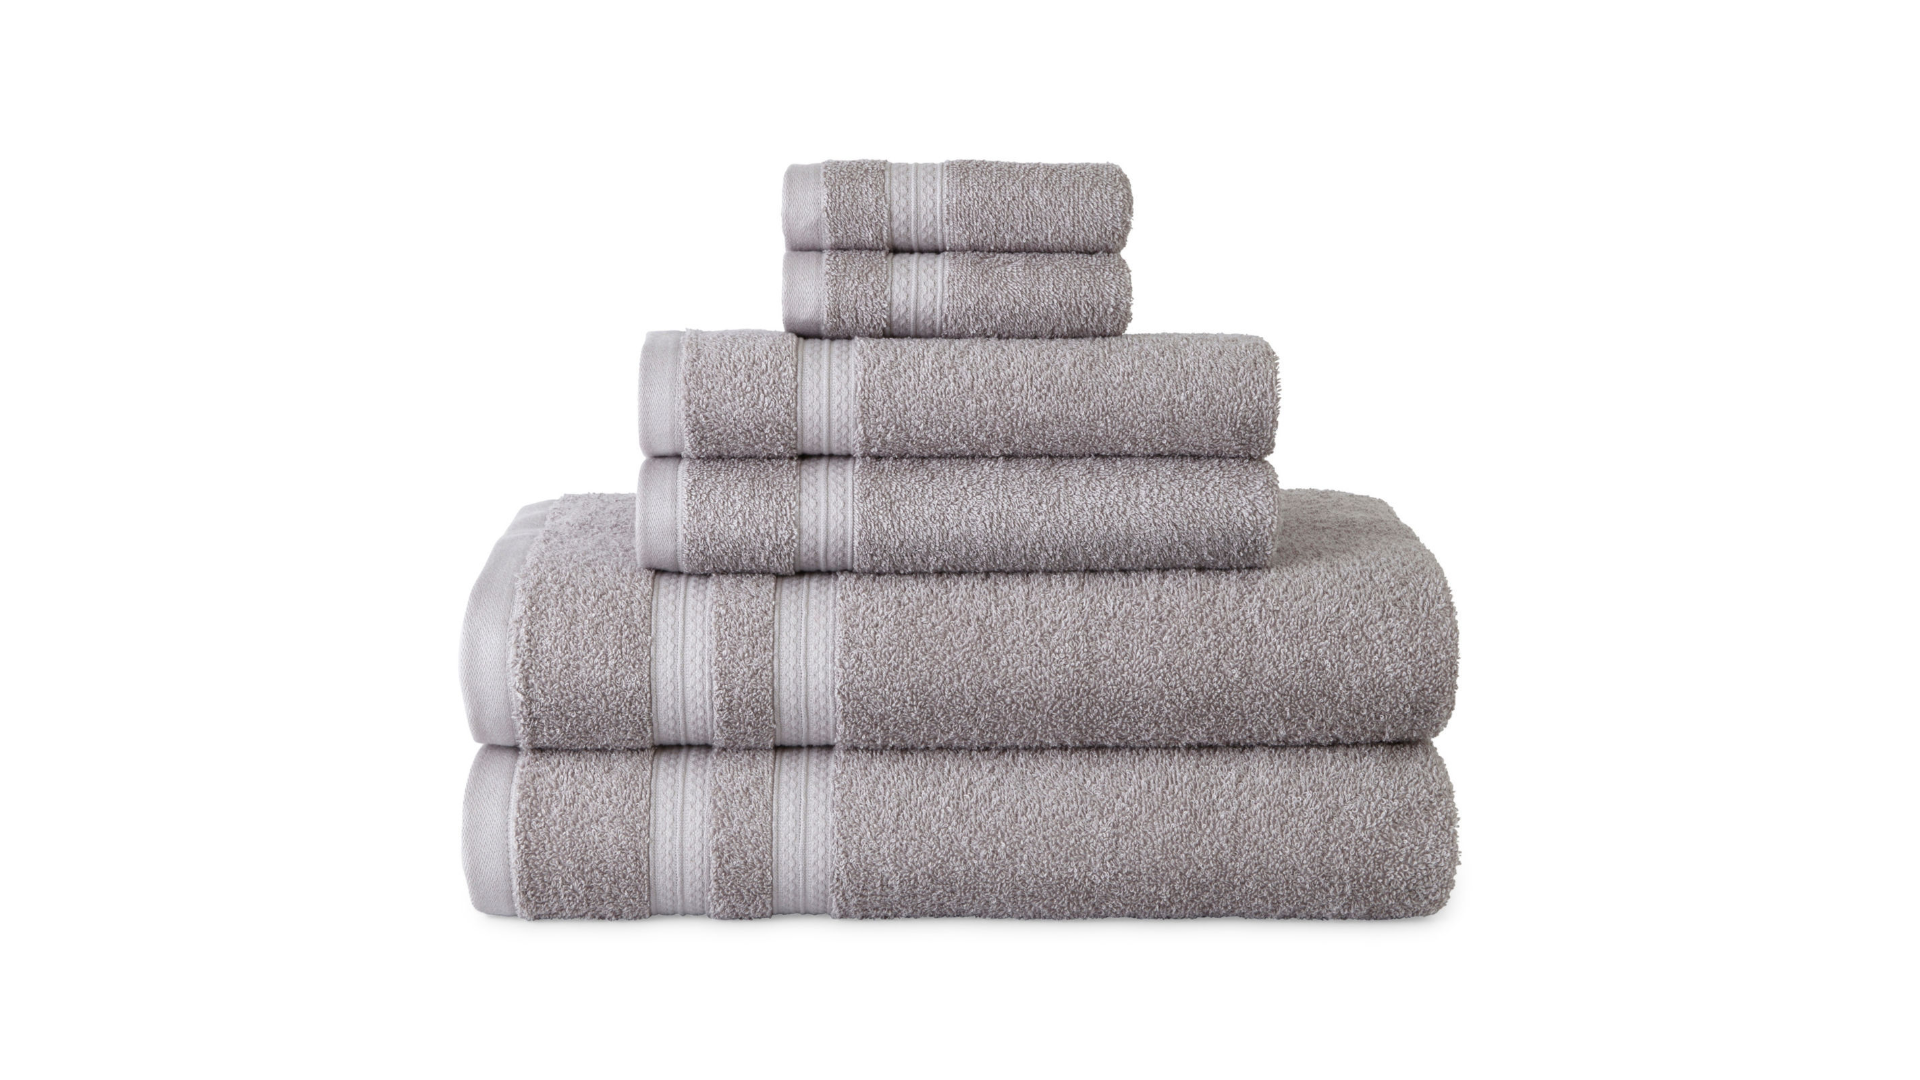 6-piece Home Expressions bath towel set for $10